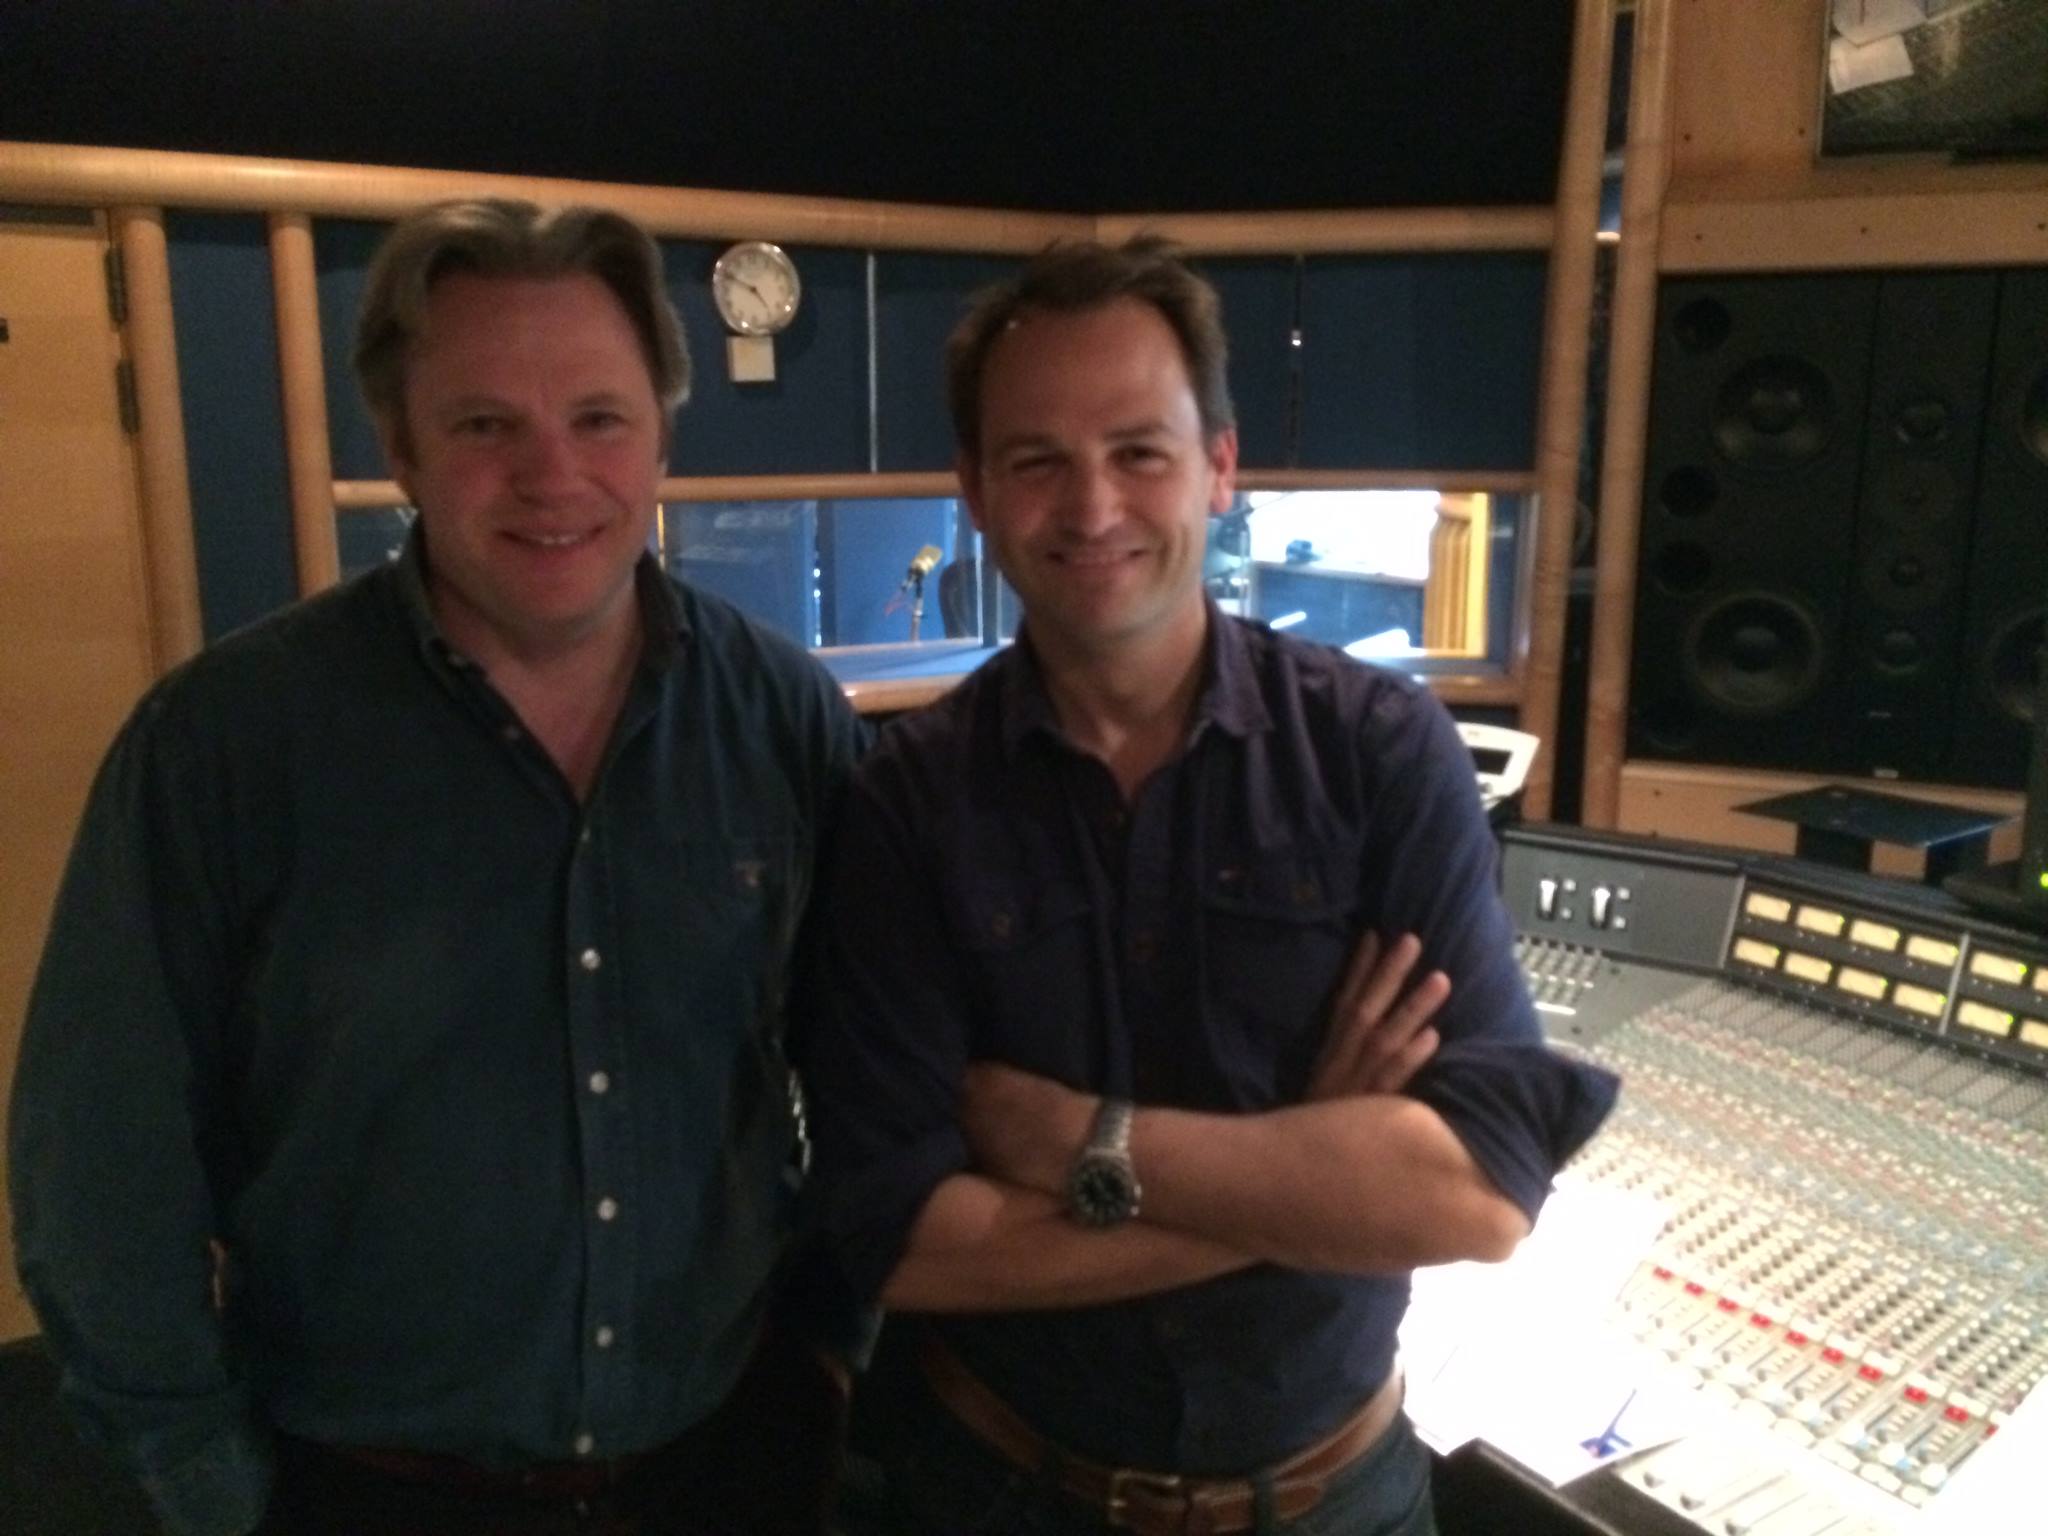 With Ben Collins (BBC Top Gear 'Stig'), Air Studios, April 2014